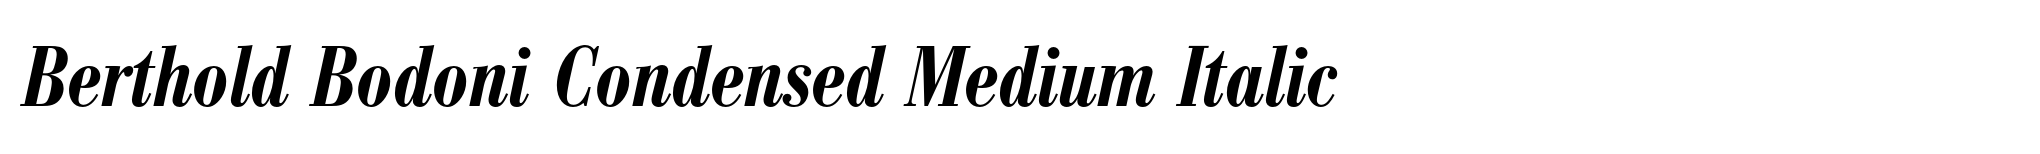 Berthold Bodoni Condensed Medium Italic image